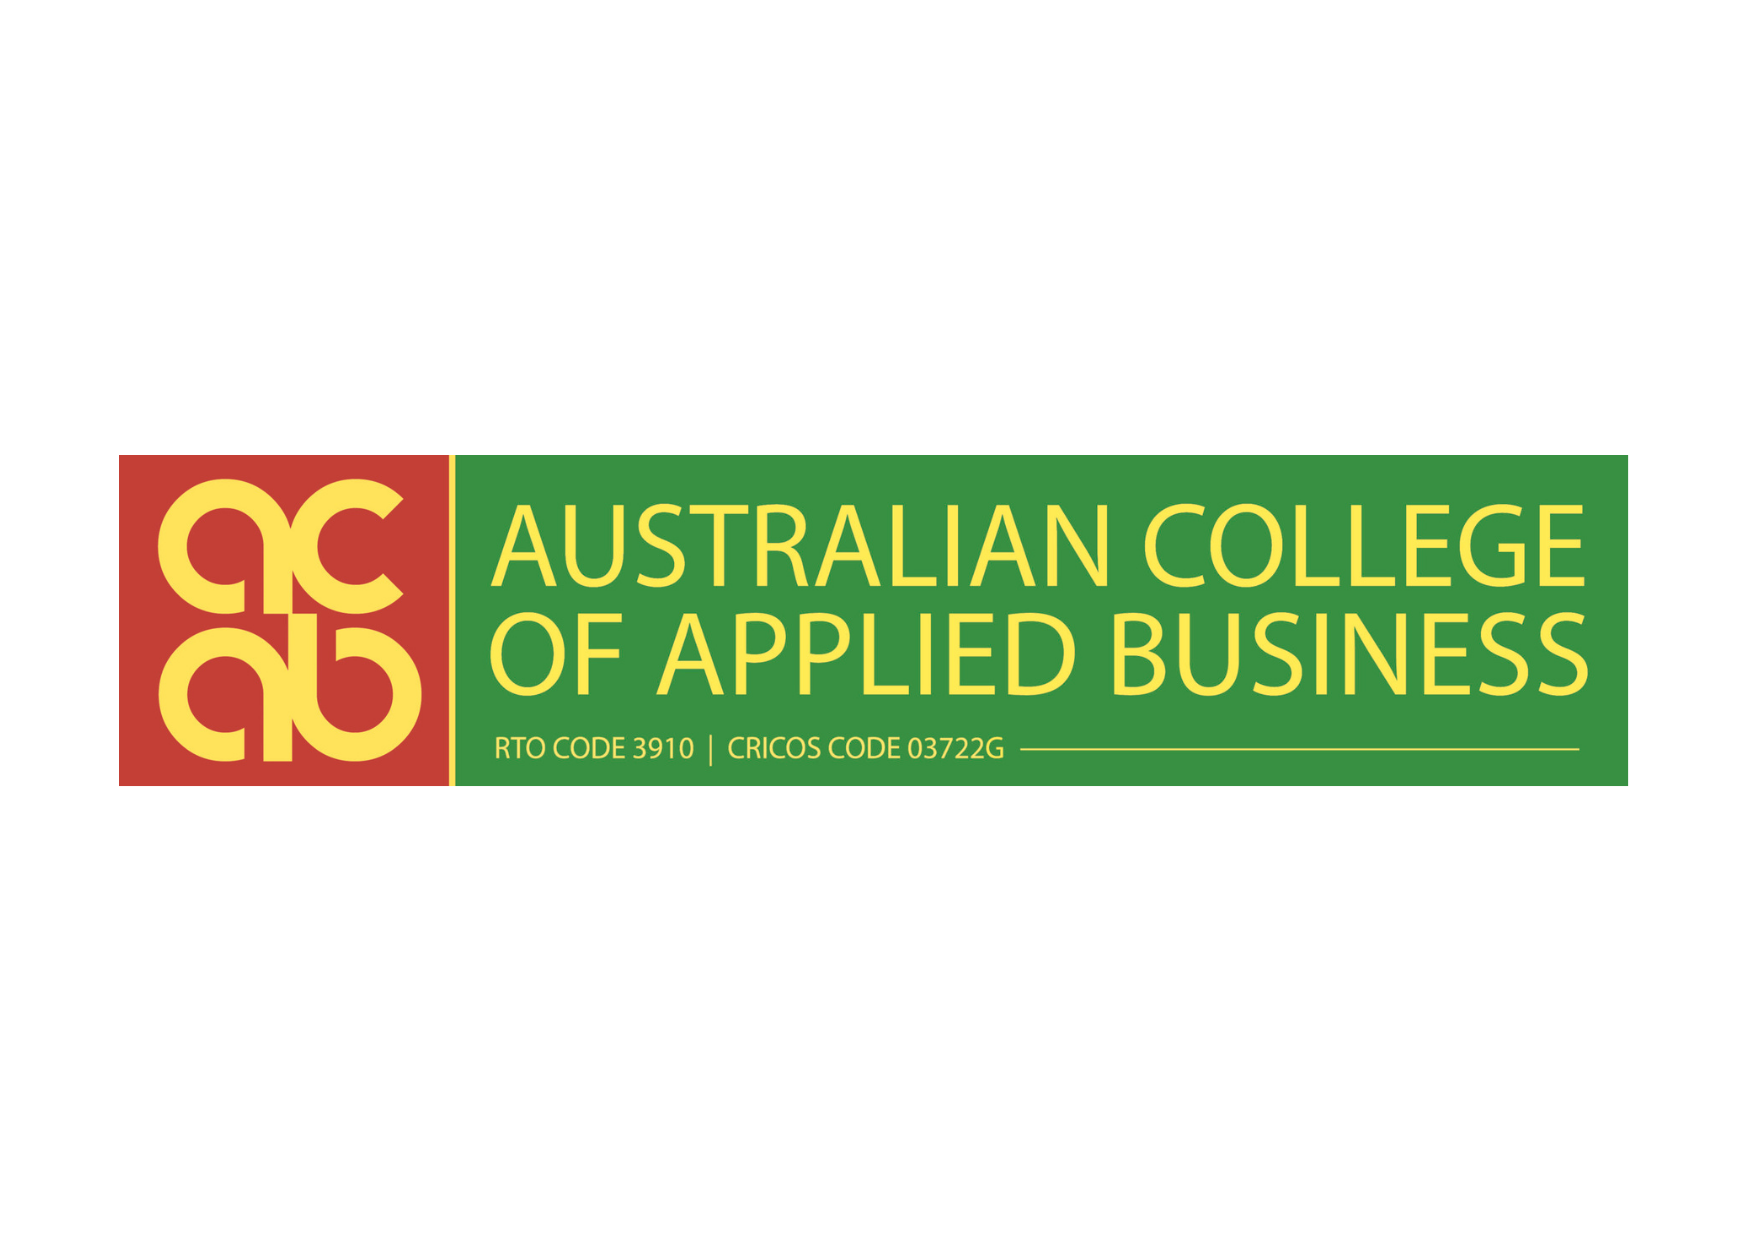 Australian College of Applied Business